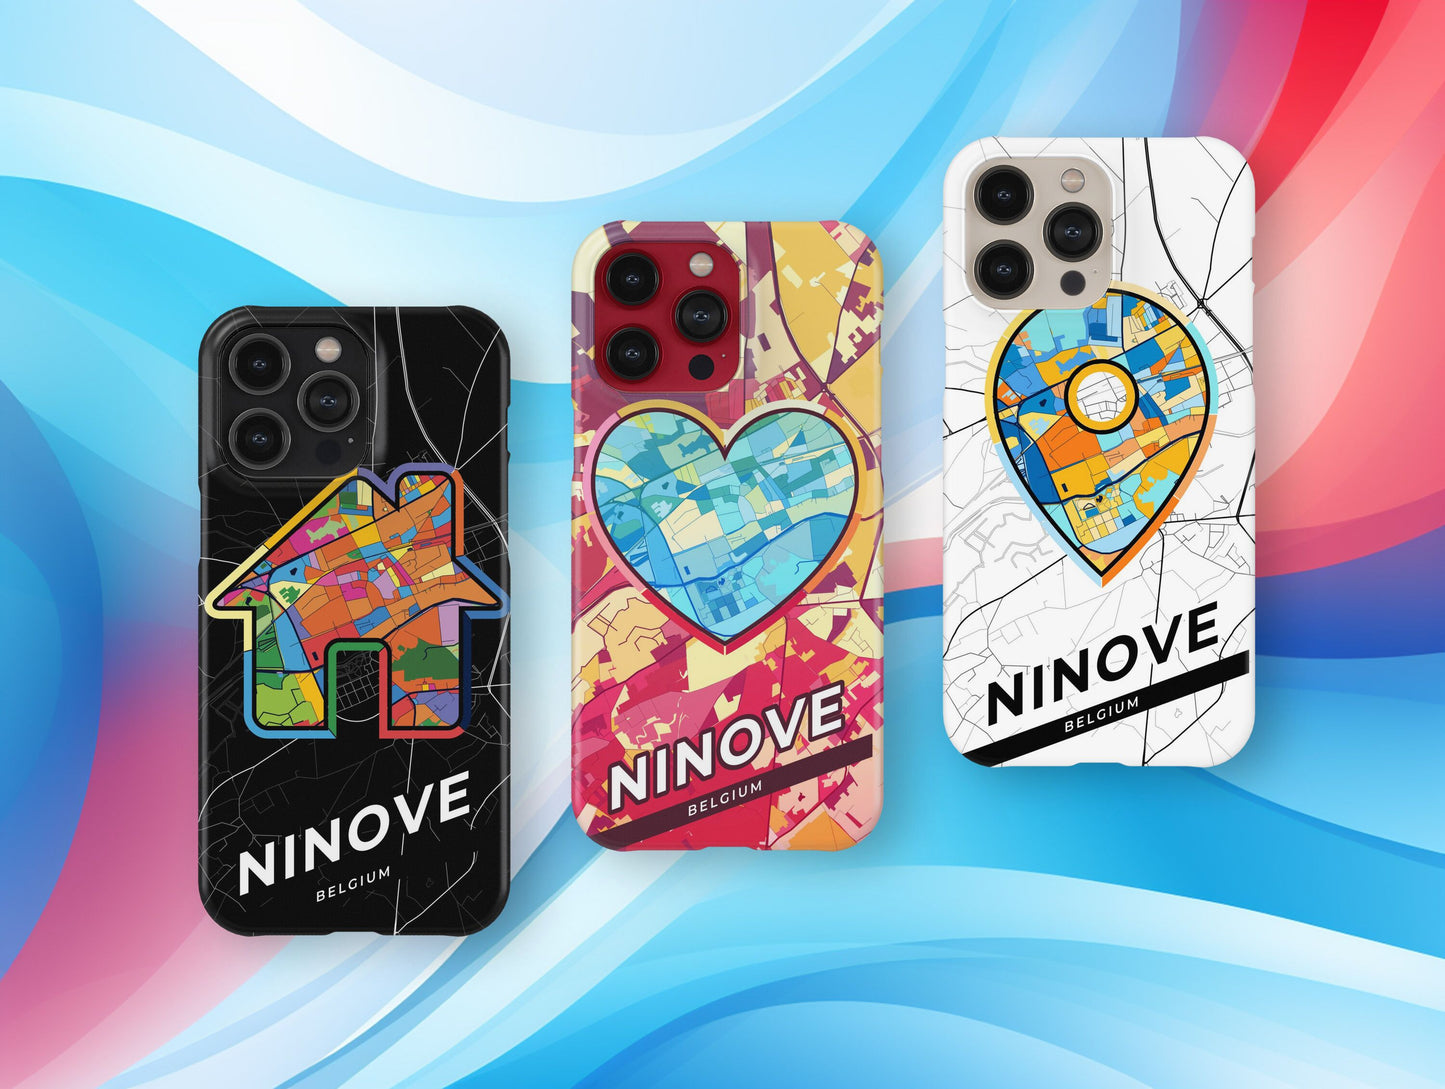 Ninove Belgium slim phone case with colorful icon. Birthday, wedding or housewarming gift. Couple match cases.